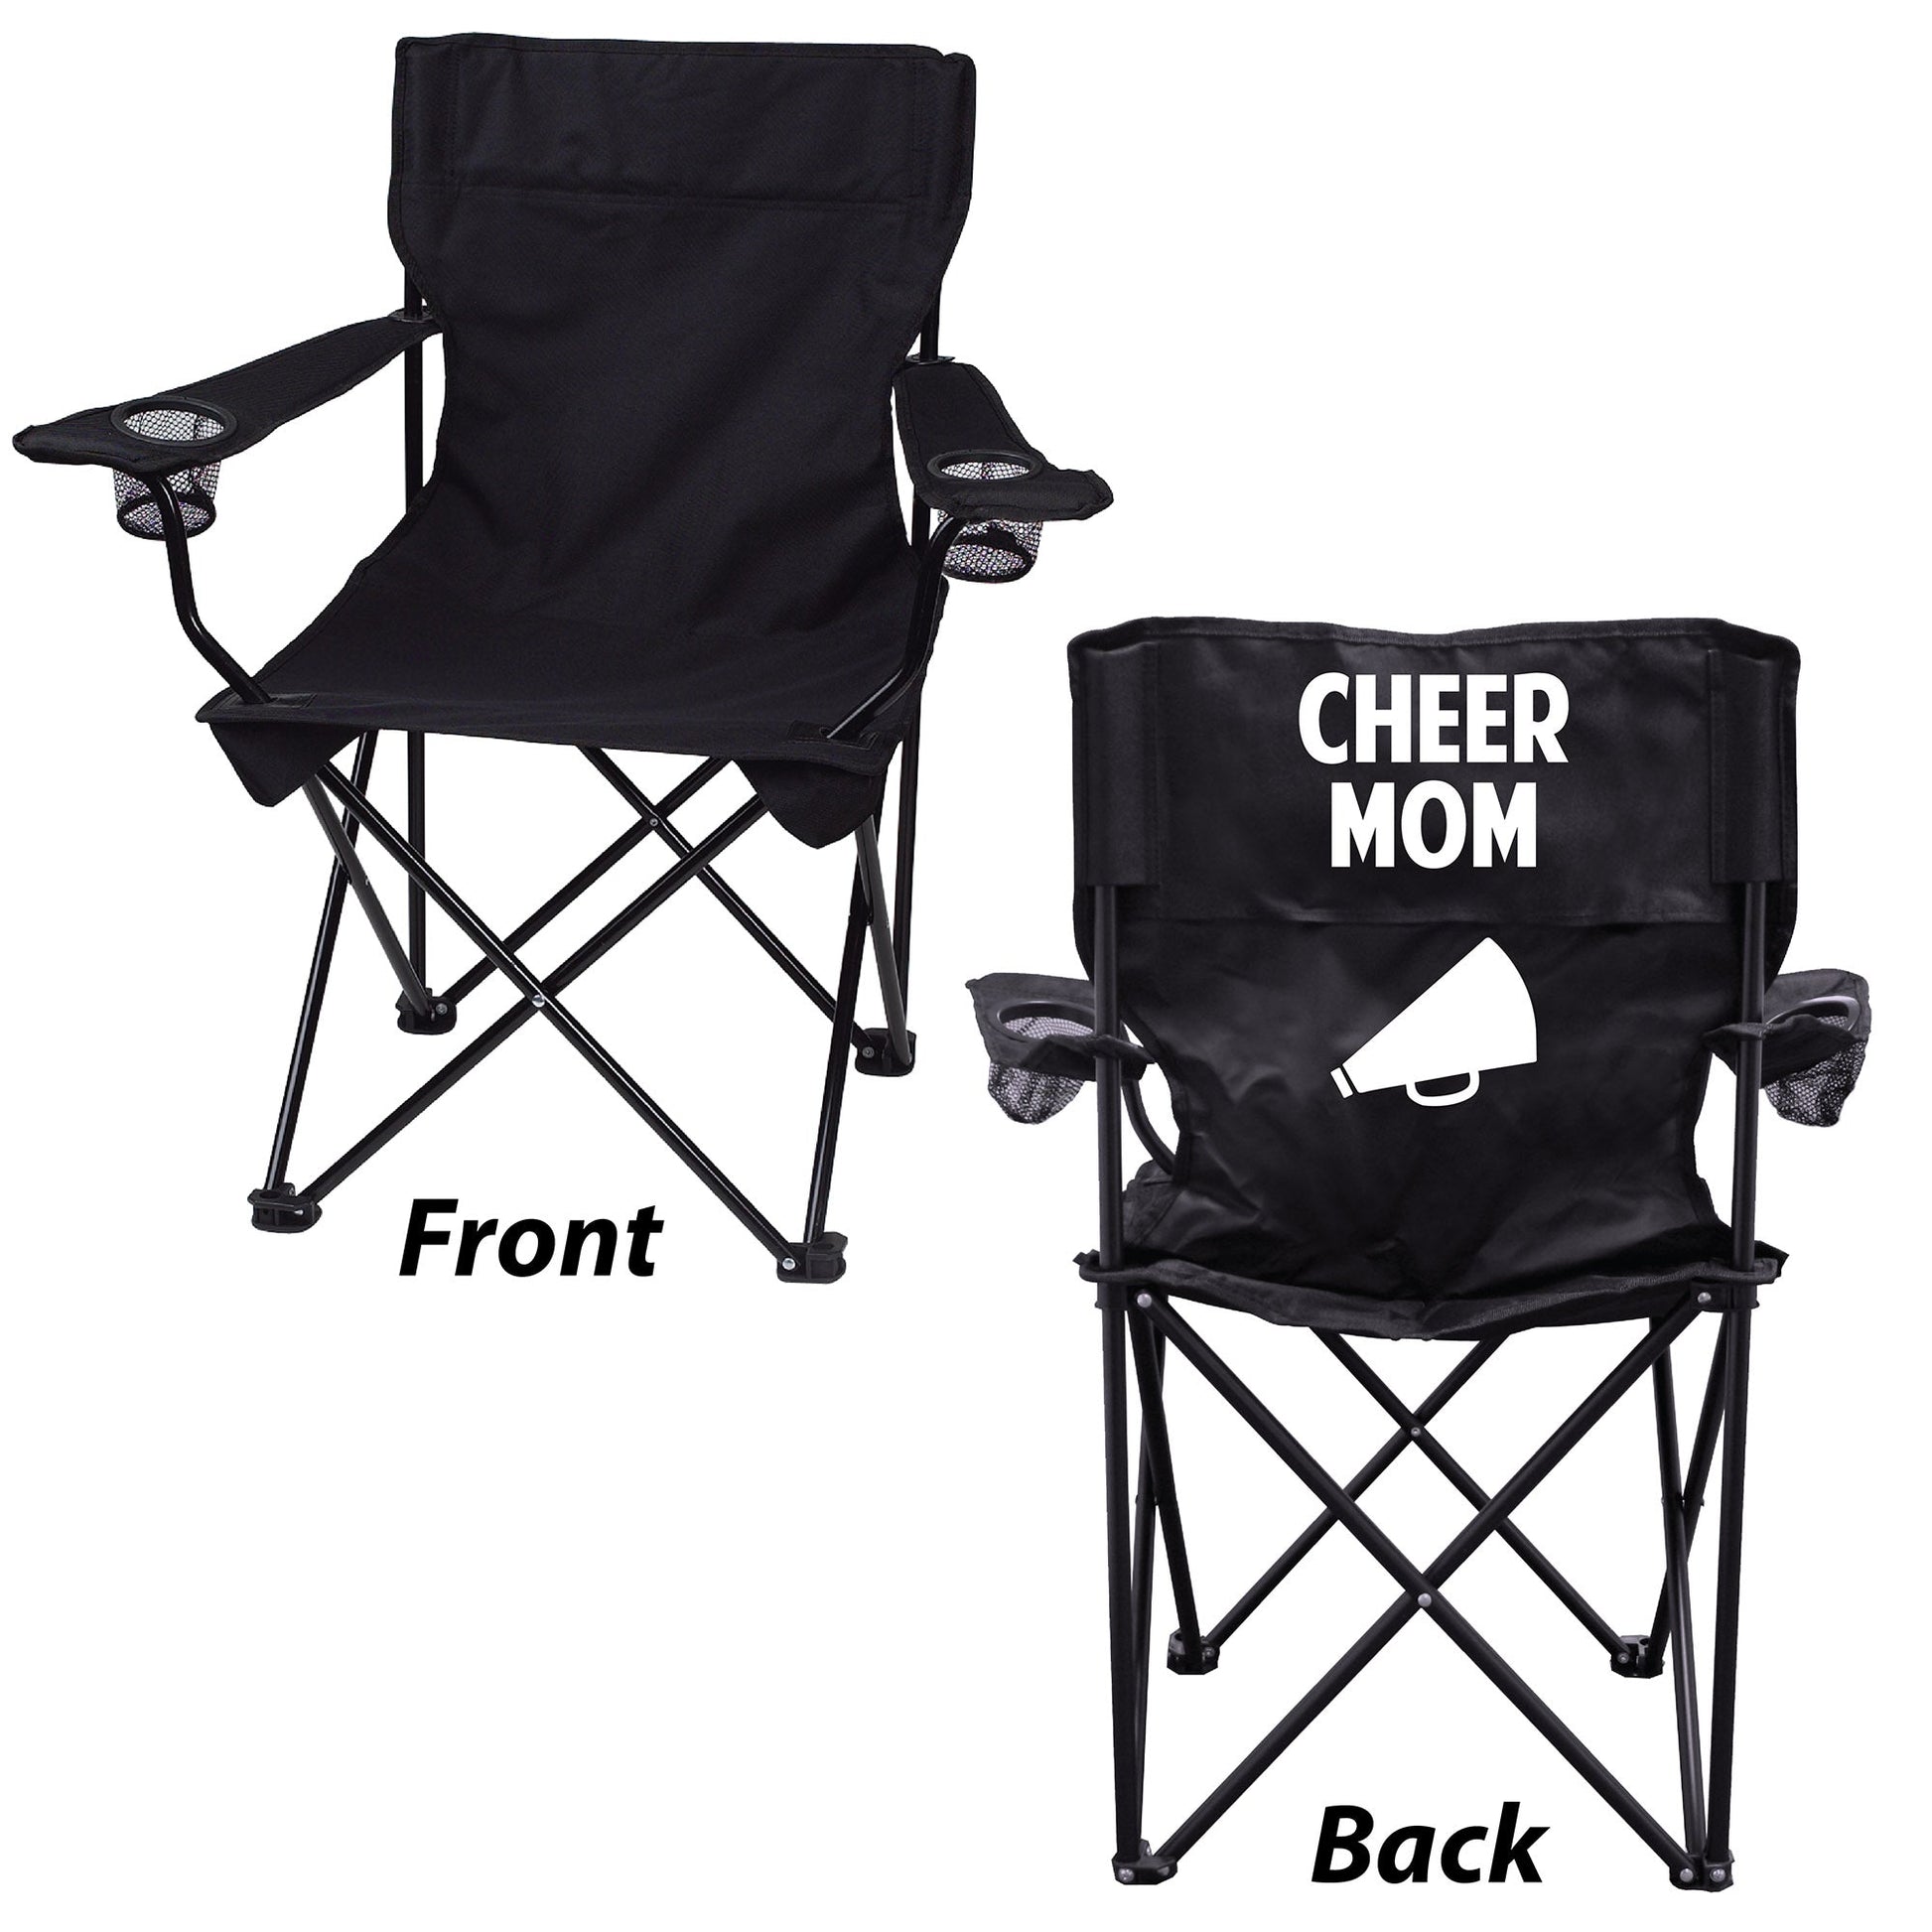 Cheer Mom Black Folding Camping Chair